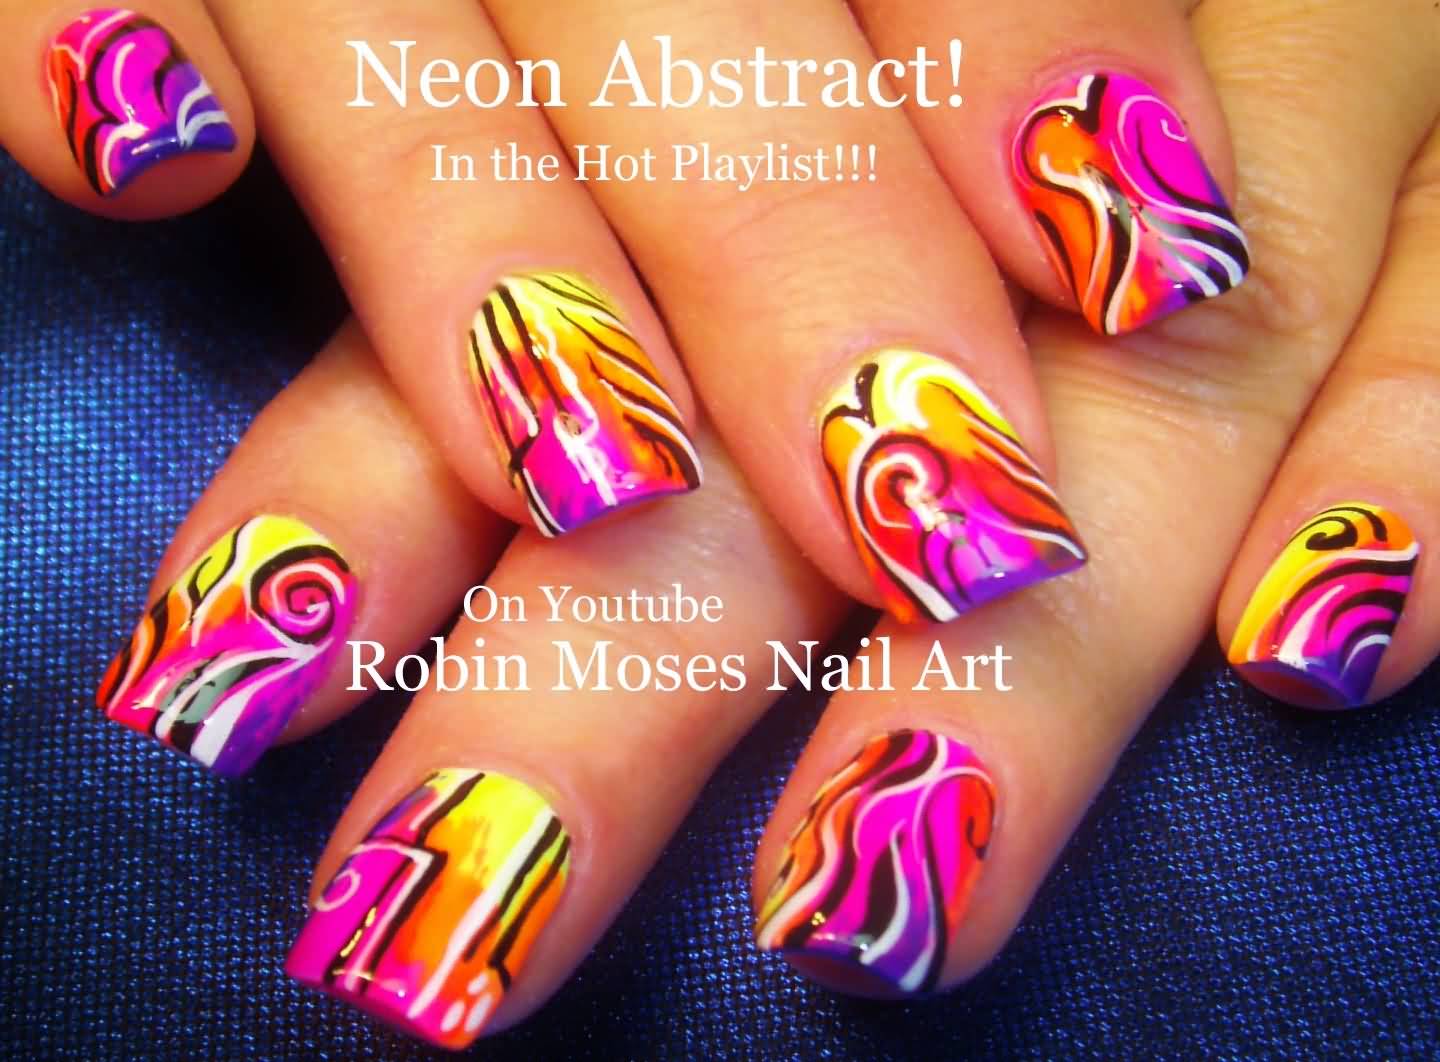 Neon Abstract Nail Art Design Idea